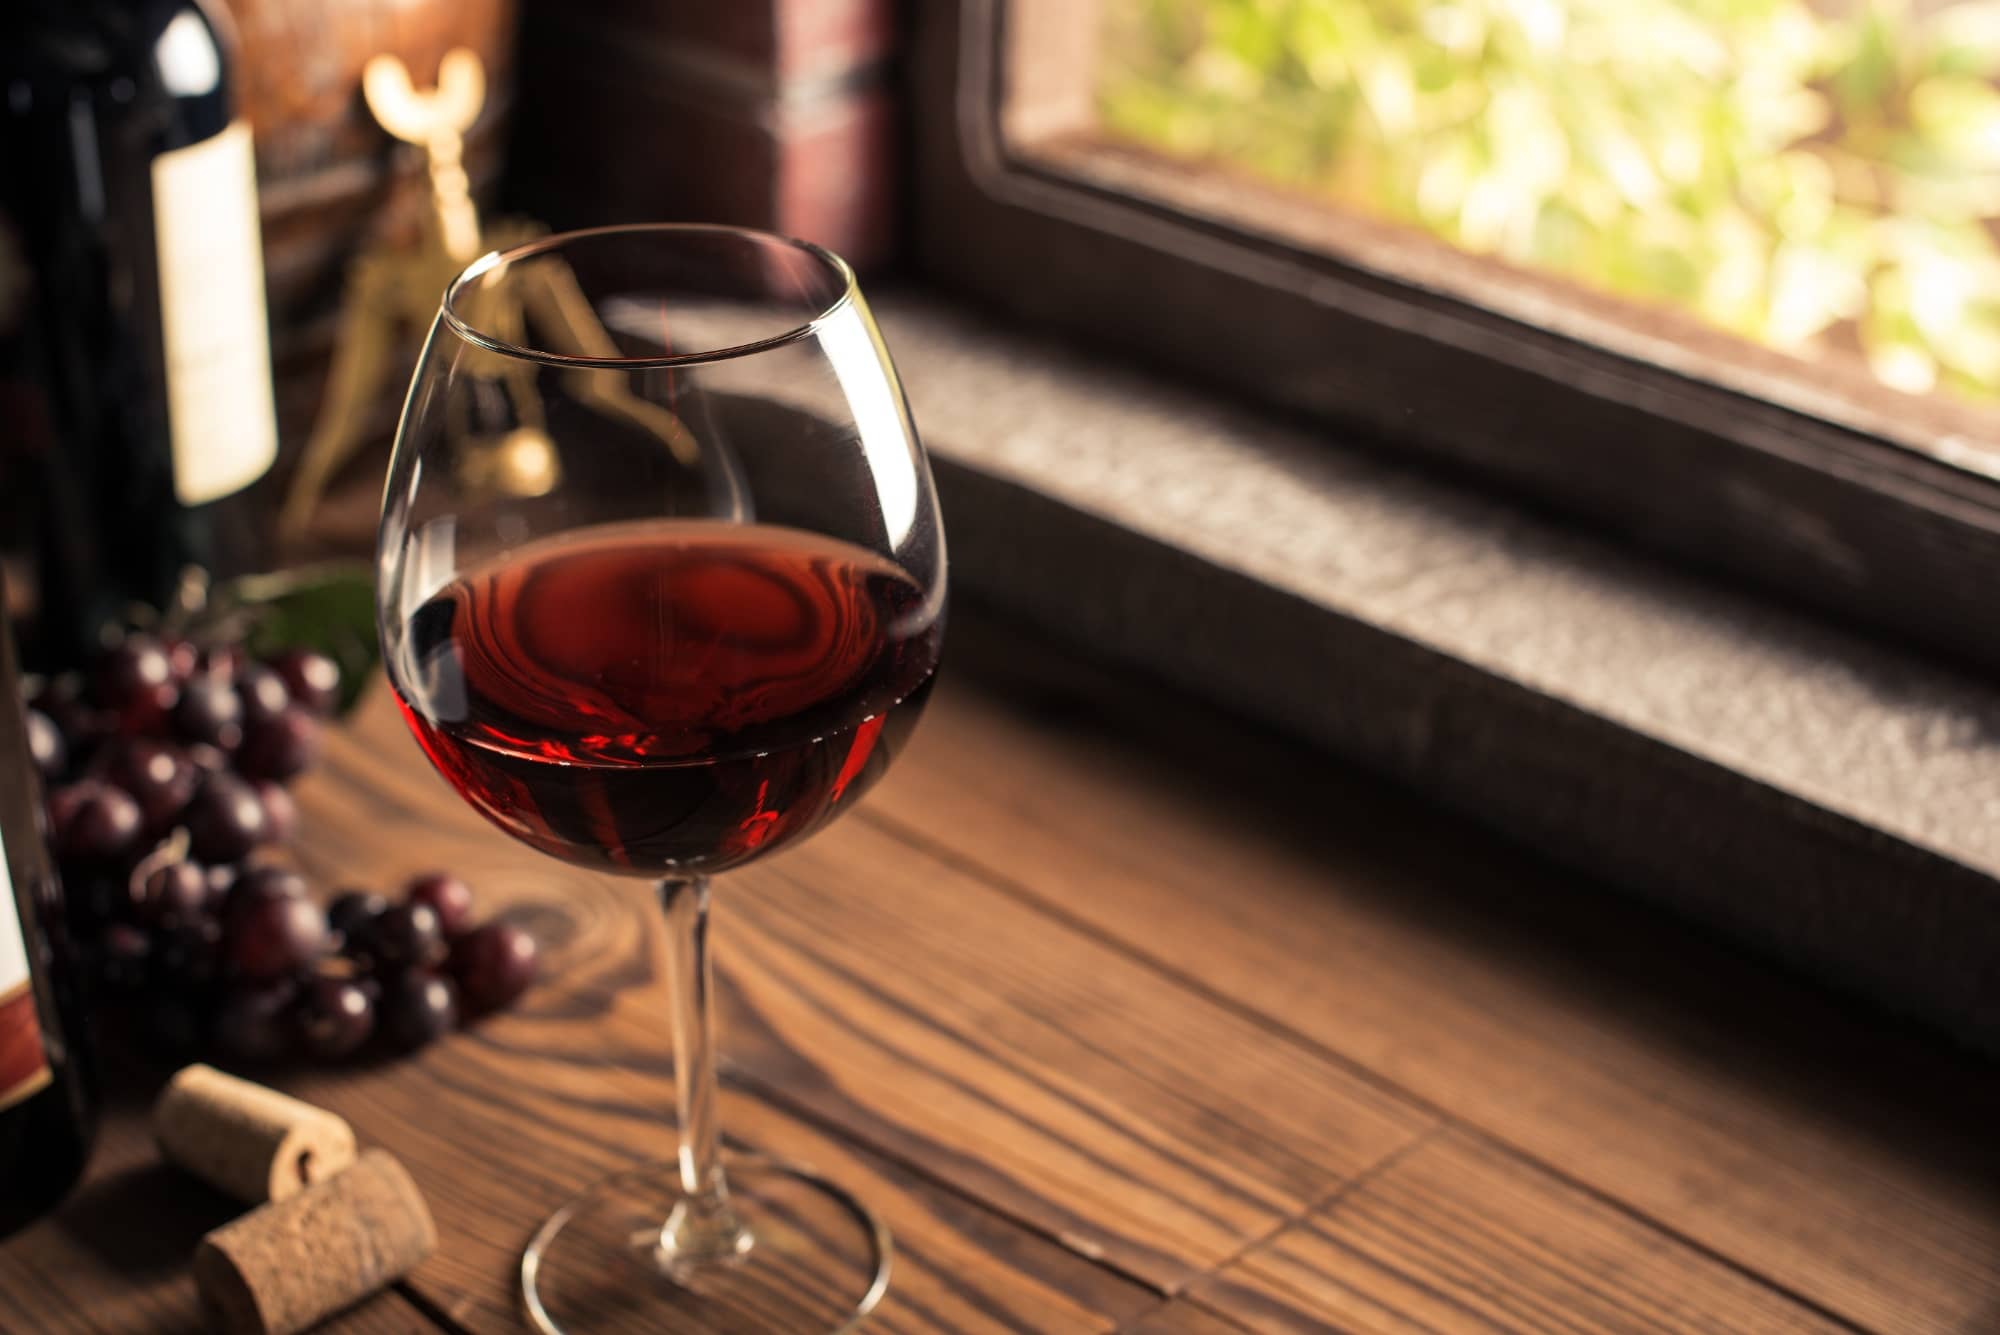 tasting delicious wines in the cellar 2021 08 26 22 39 47 utc